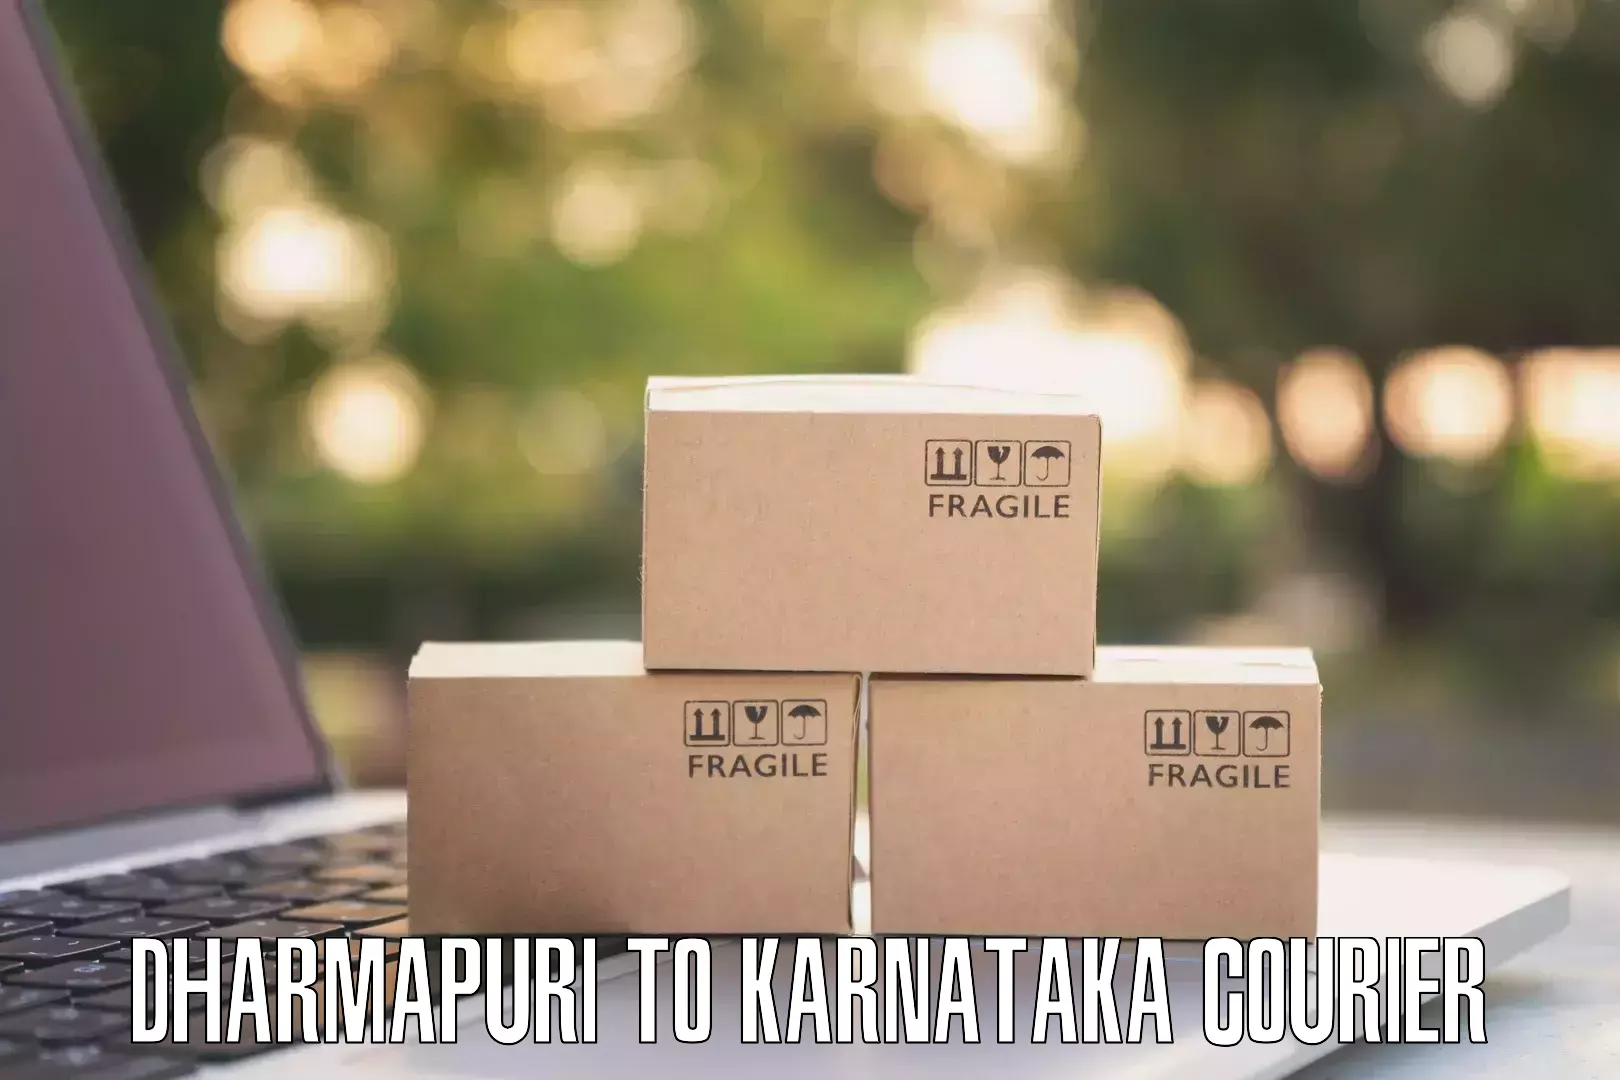 Cash on delivery service Dharmapuri to Harohalli